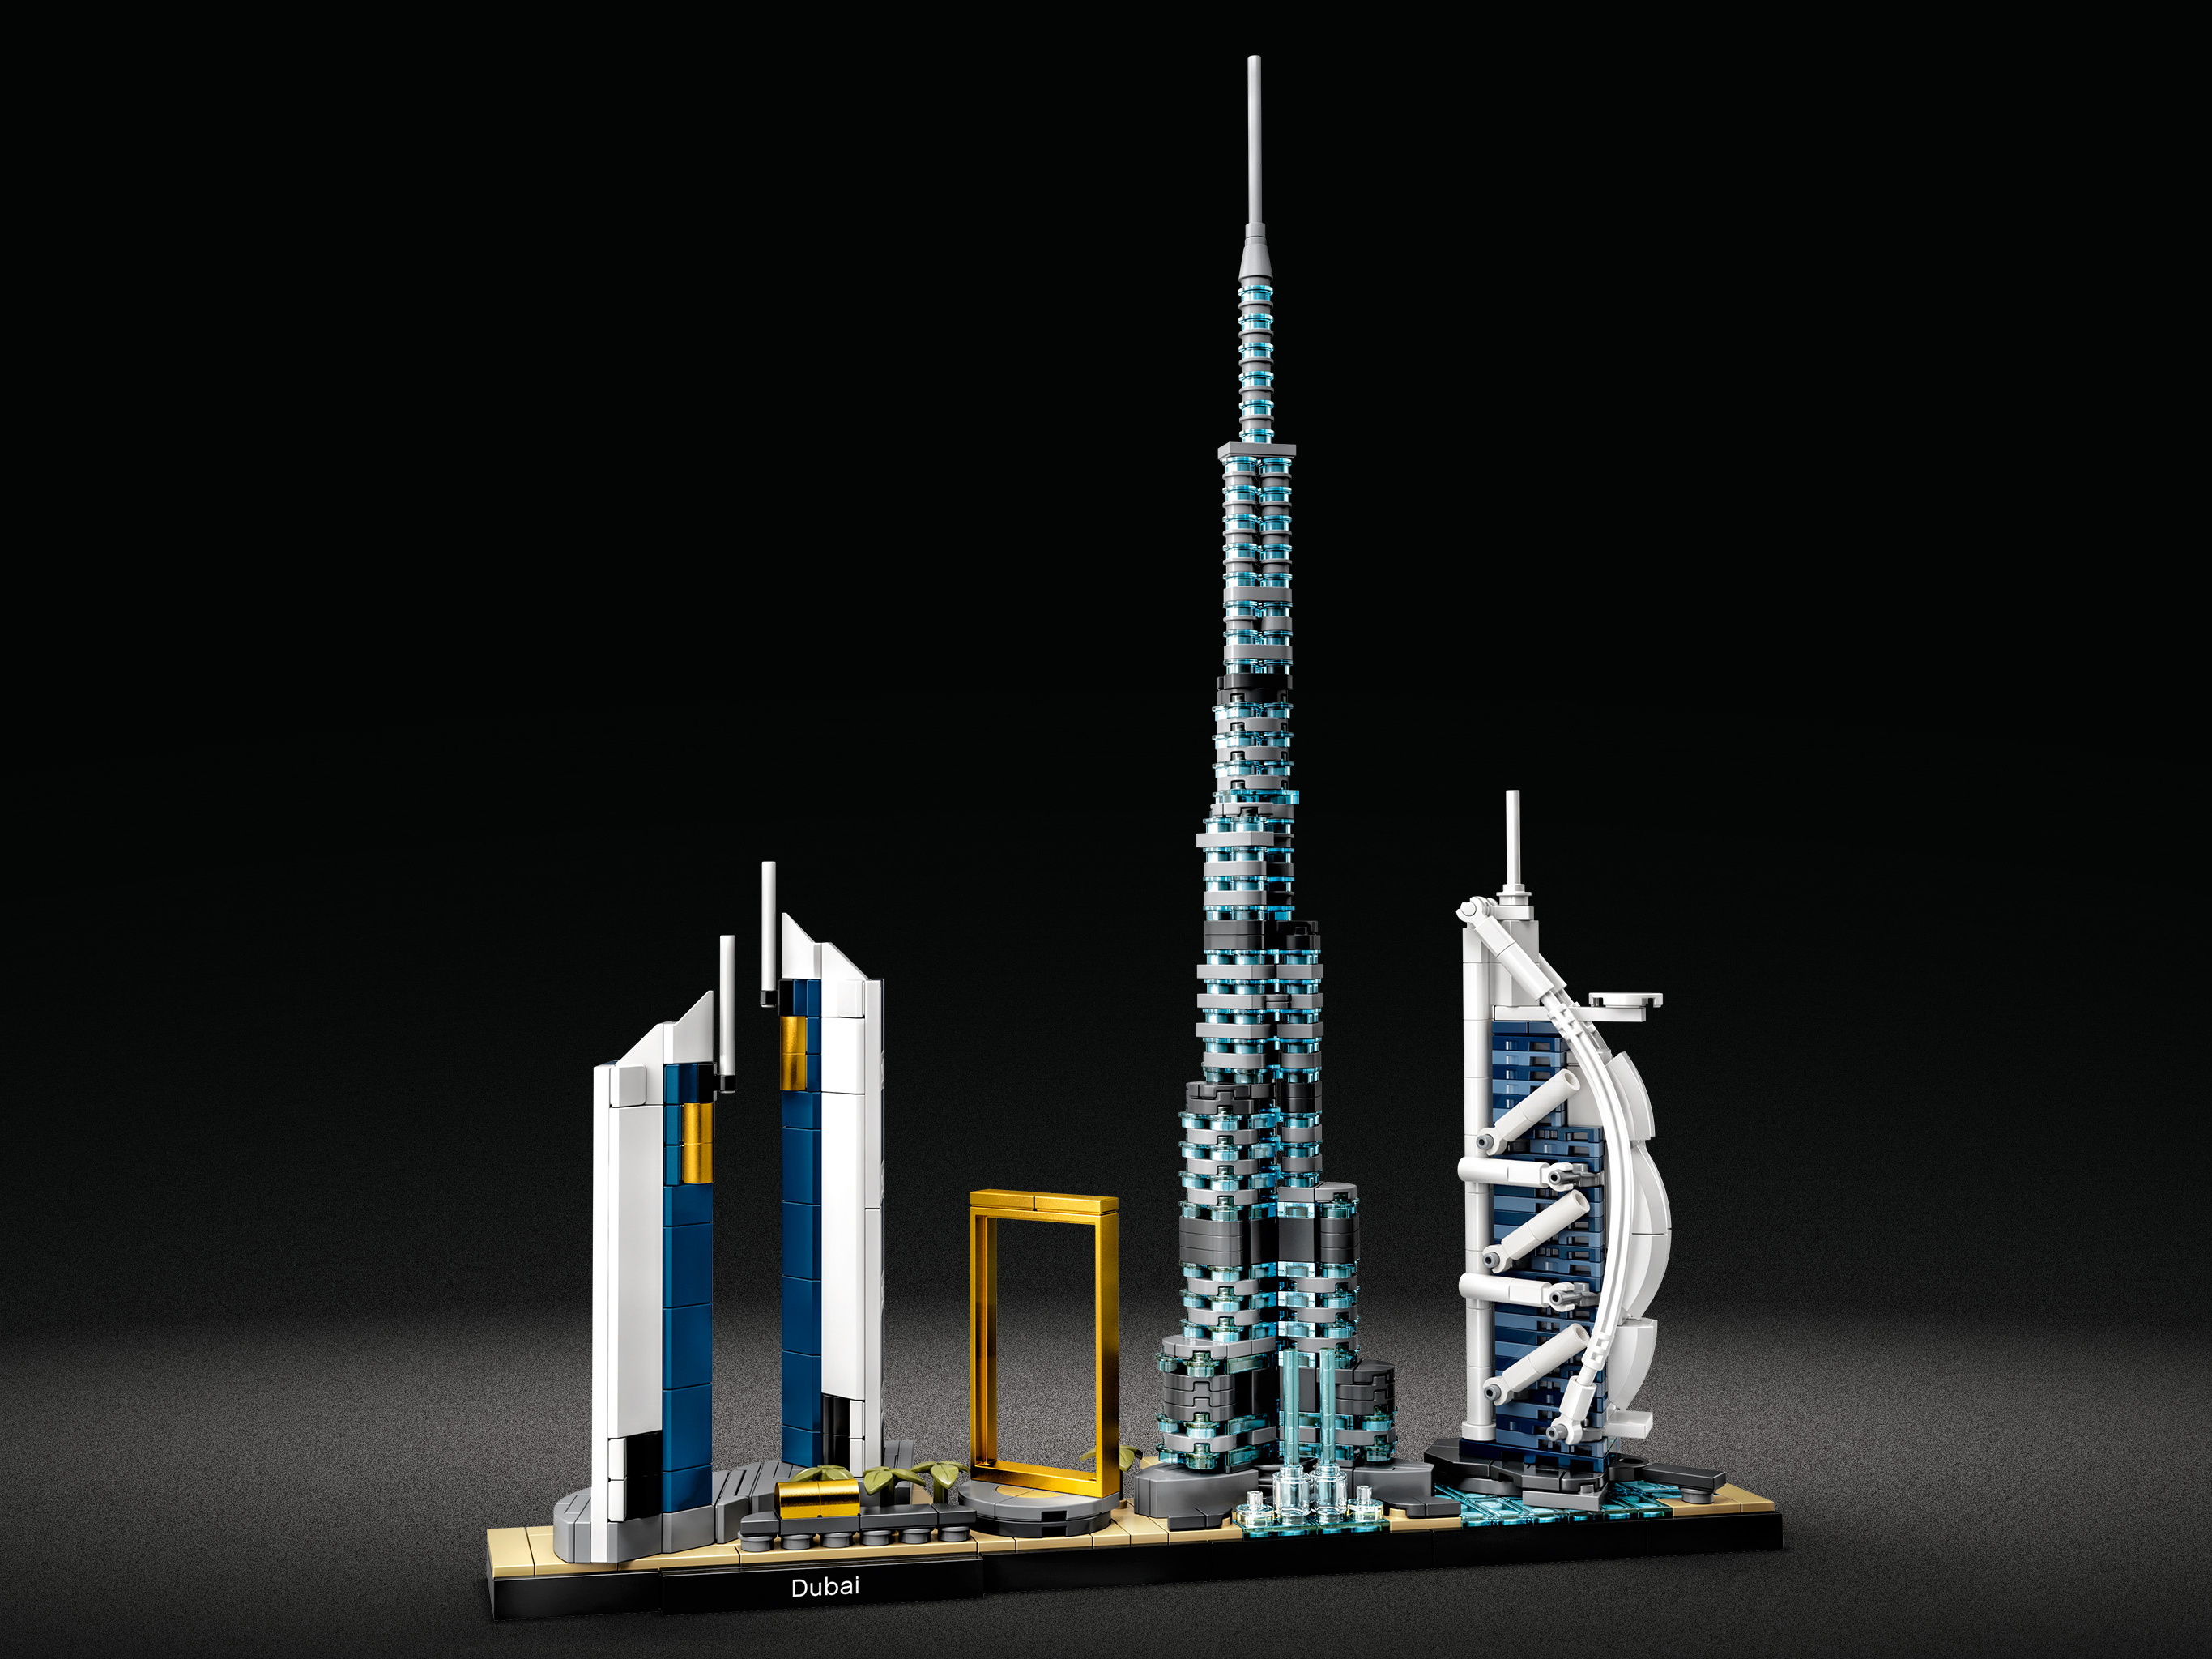 Конструктор LEGO Architecture 21052 Дубай